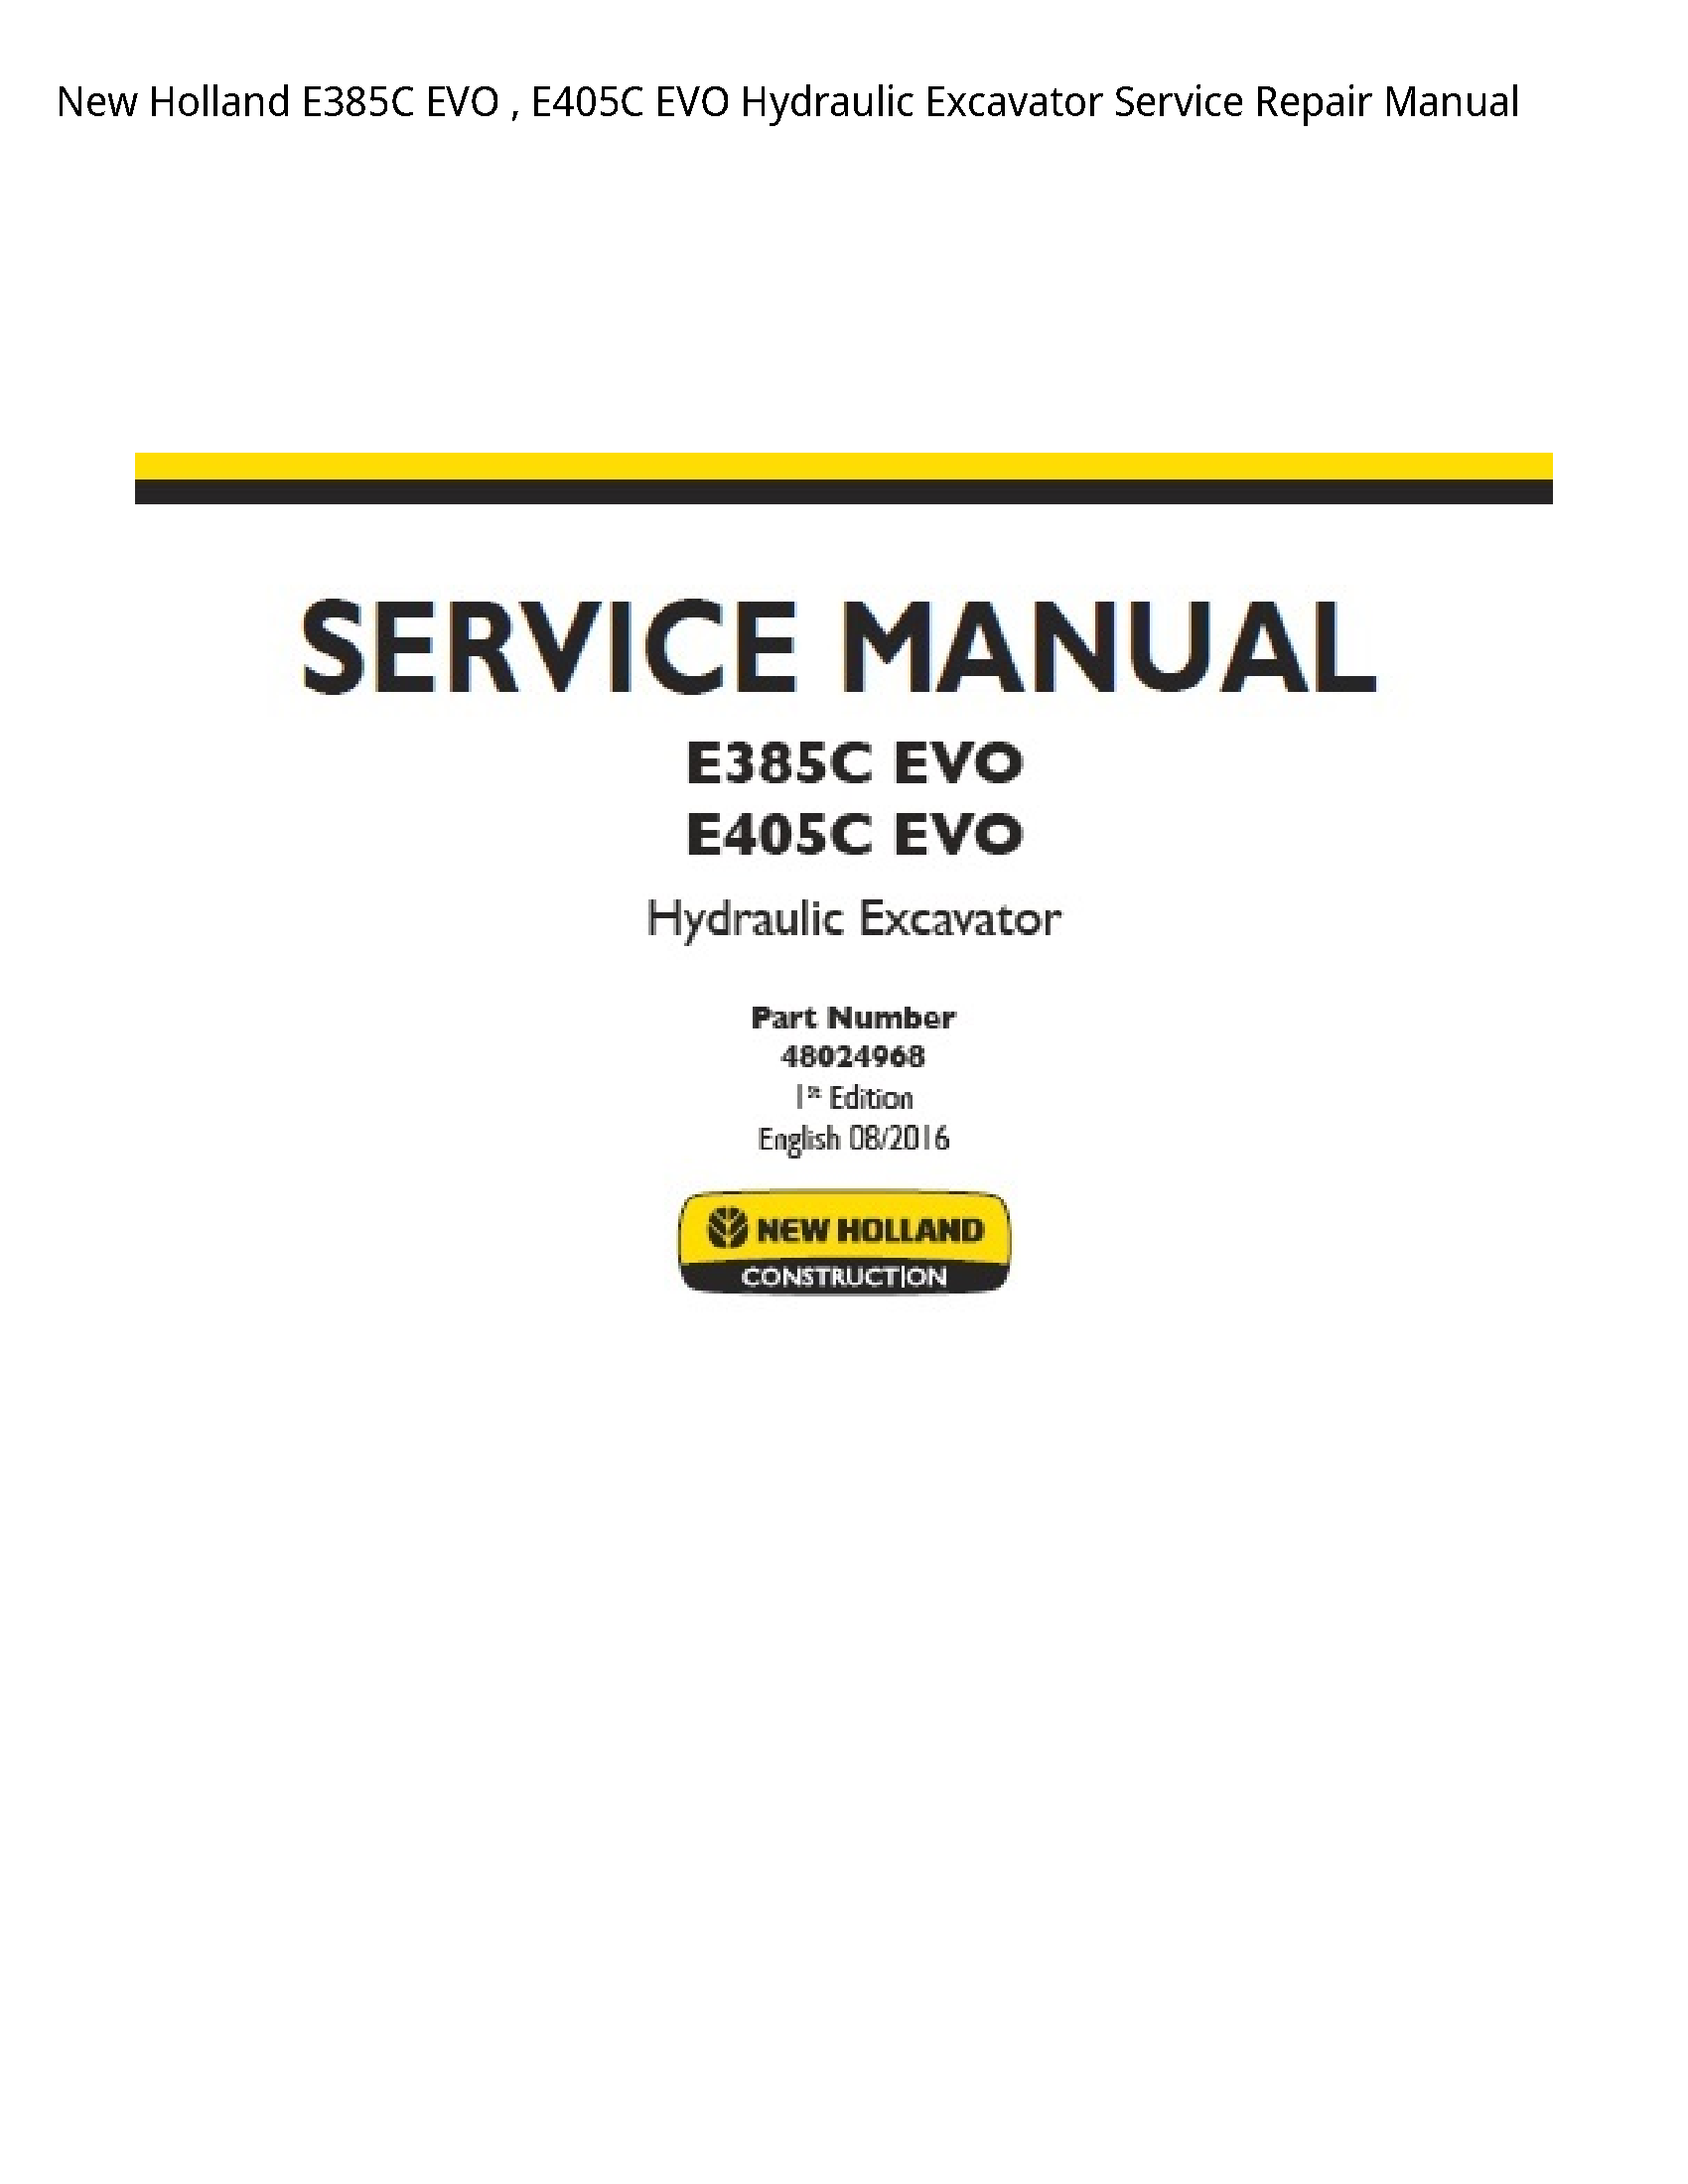 New Holland E385C EVO EVO Hydraulic Excavator manual